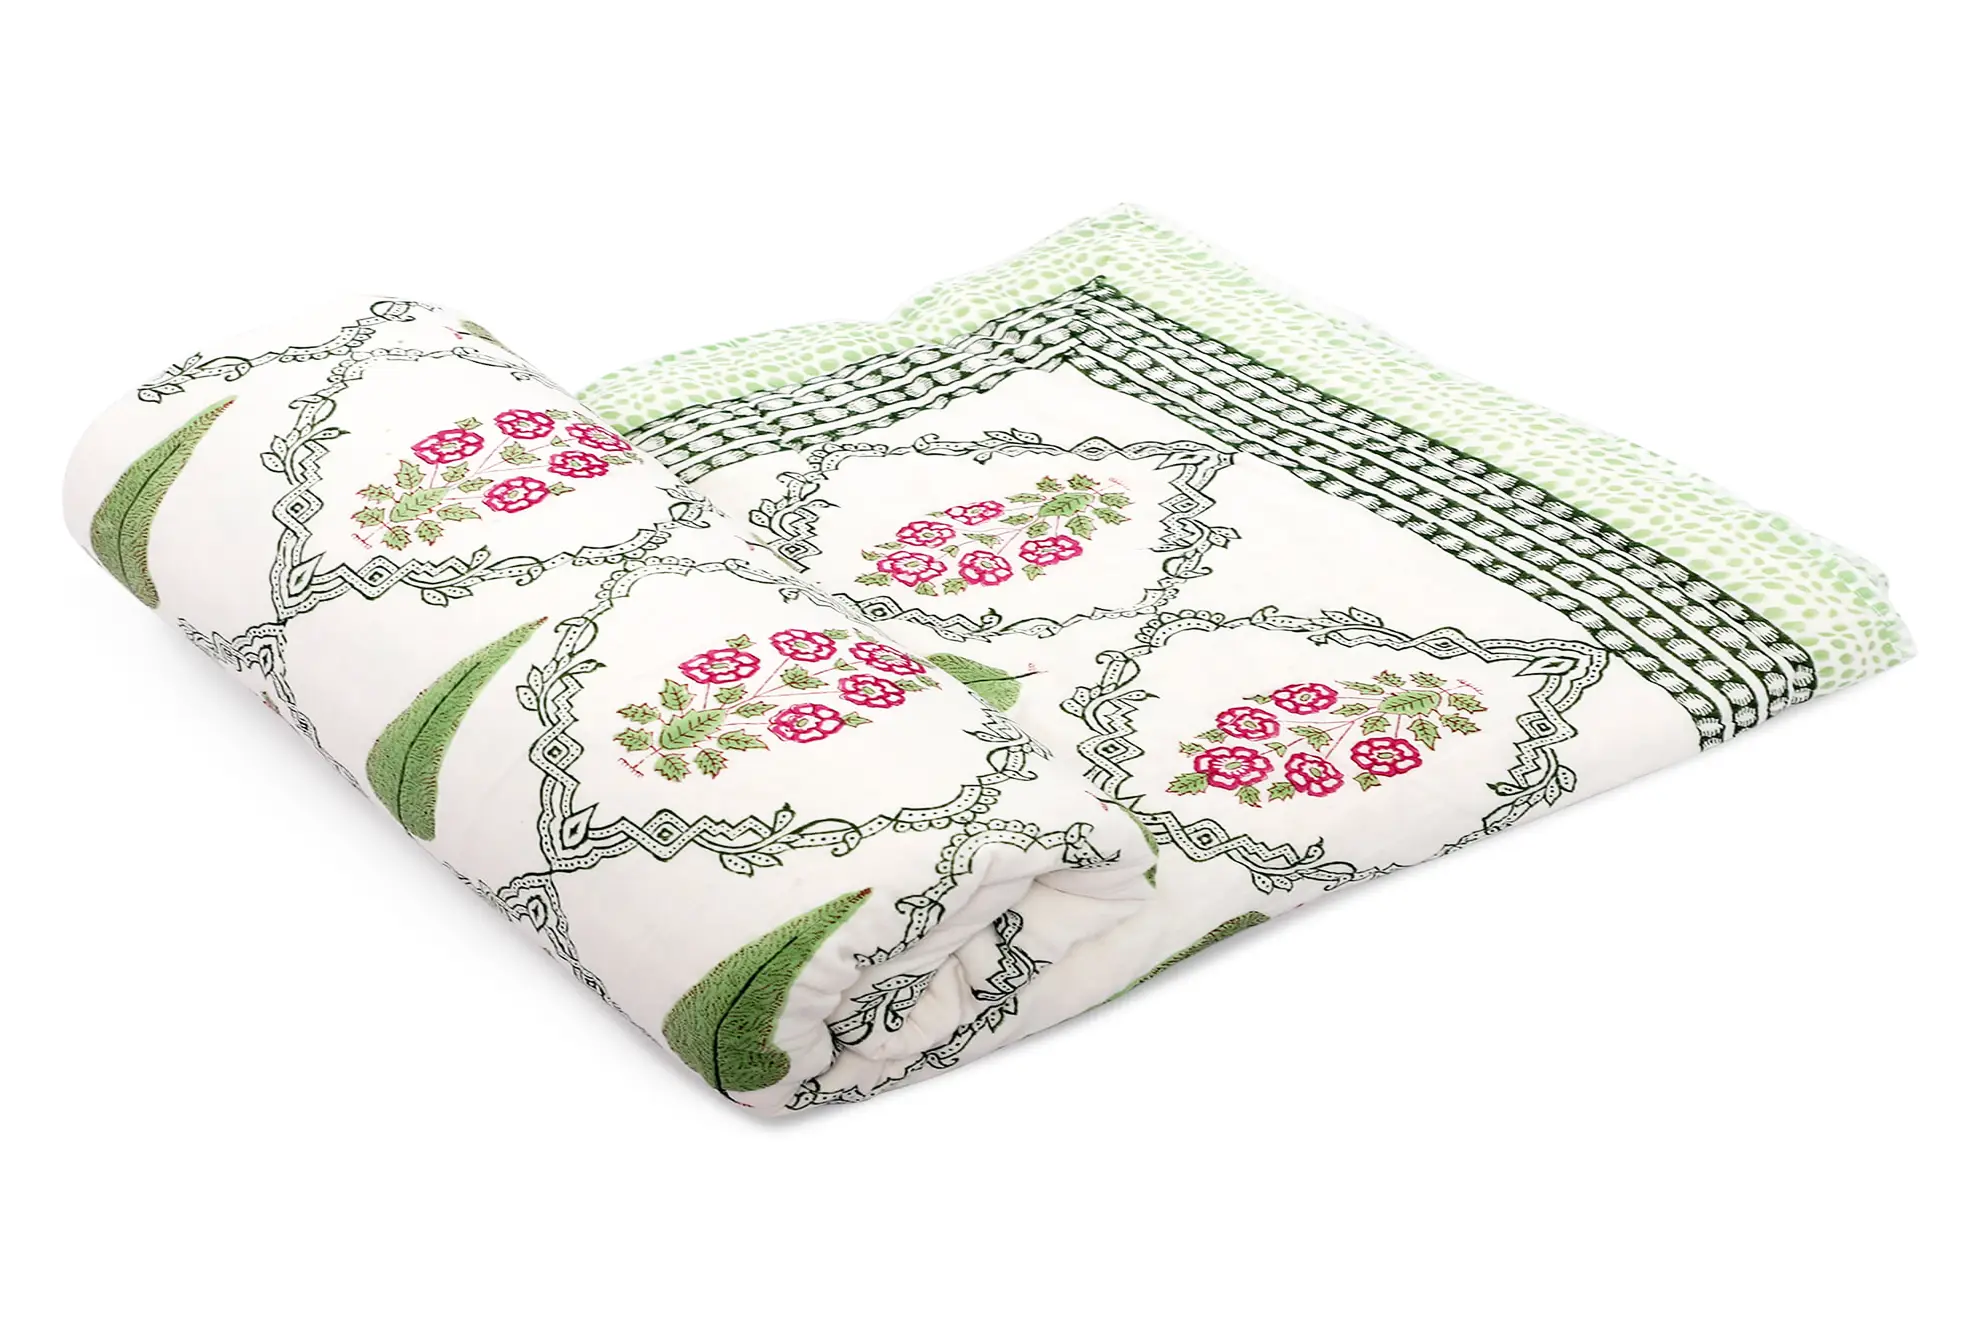 Udyana Quilt Set – Hand Block Printed 100% Cotton Reversible Quilt